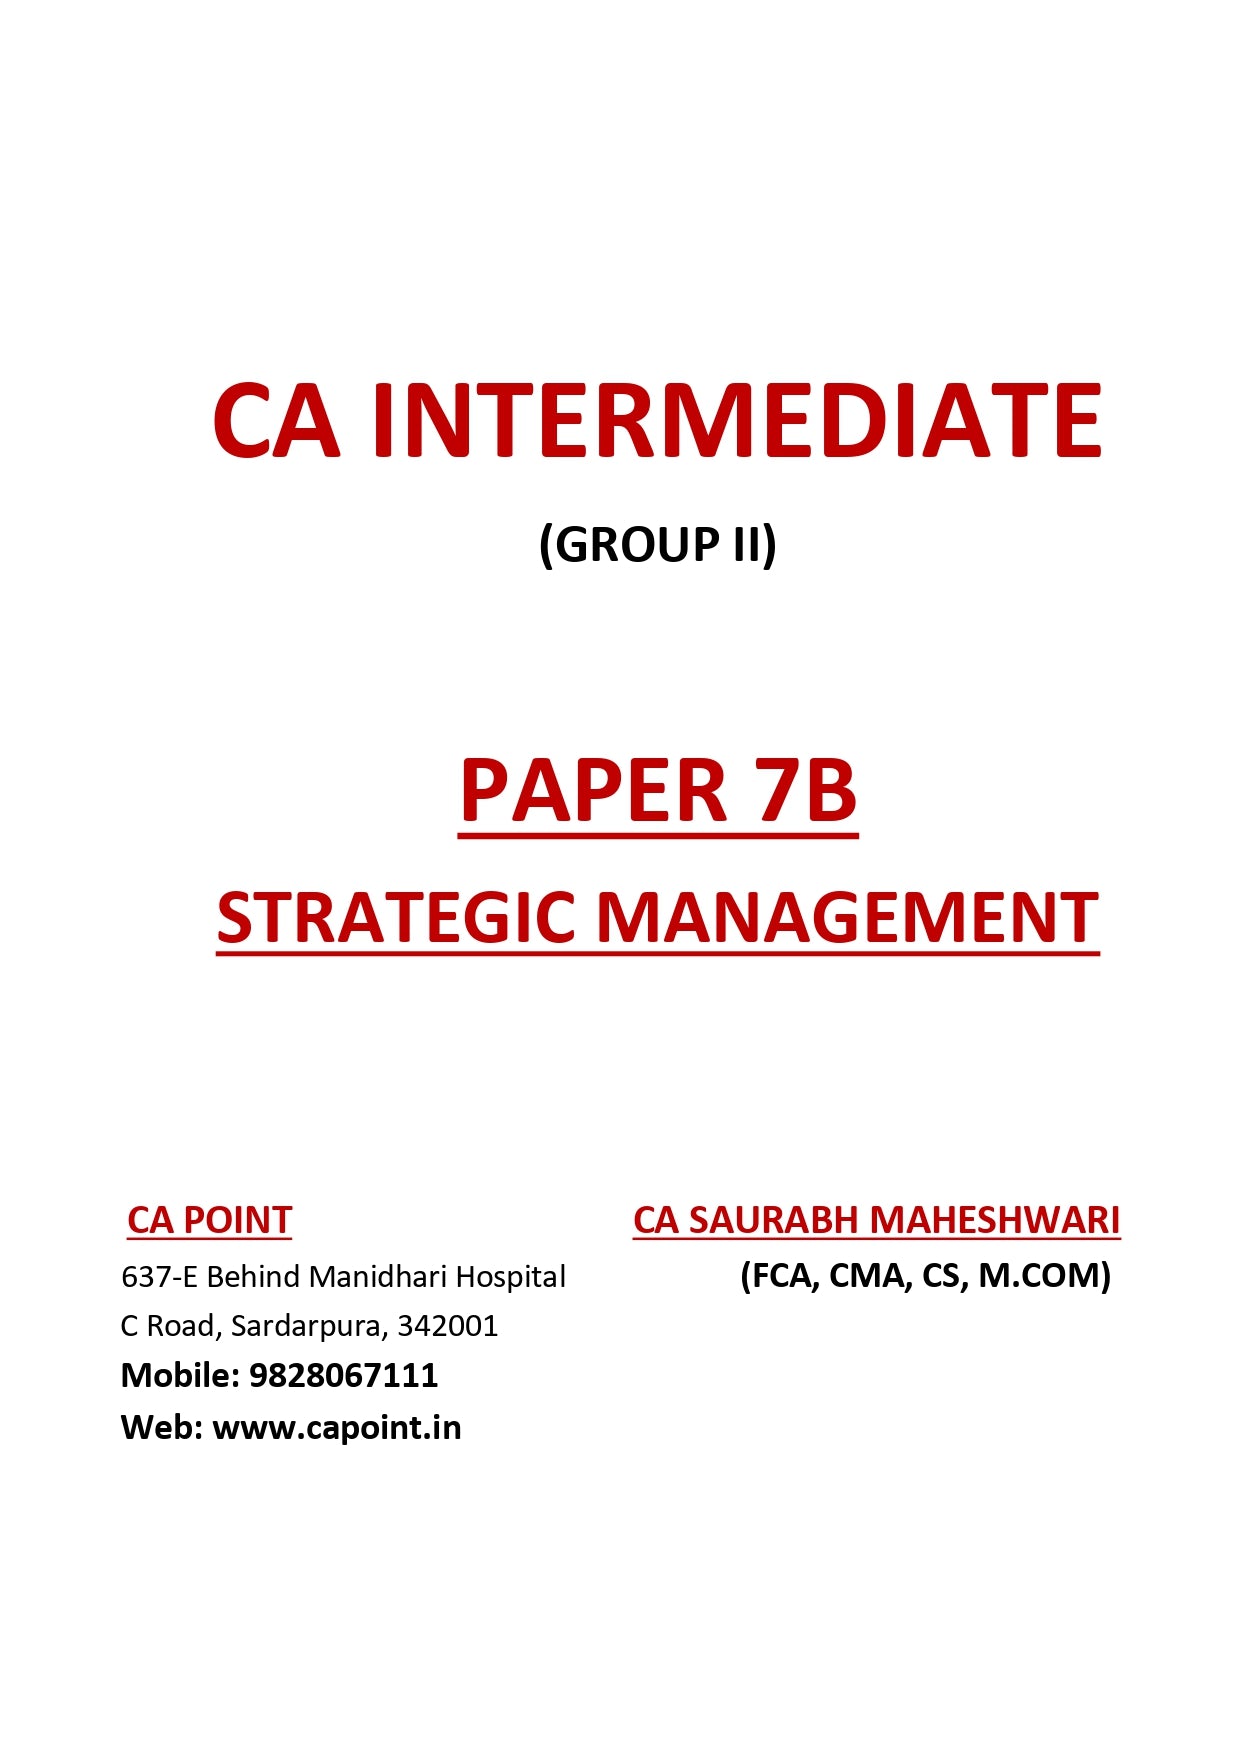 CA Inter Strategic Management Book by CA Saurabh Maheshwari for May 23 Exams & Onwards